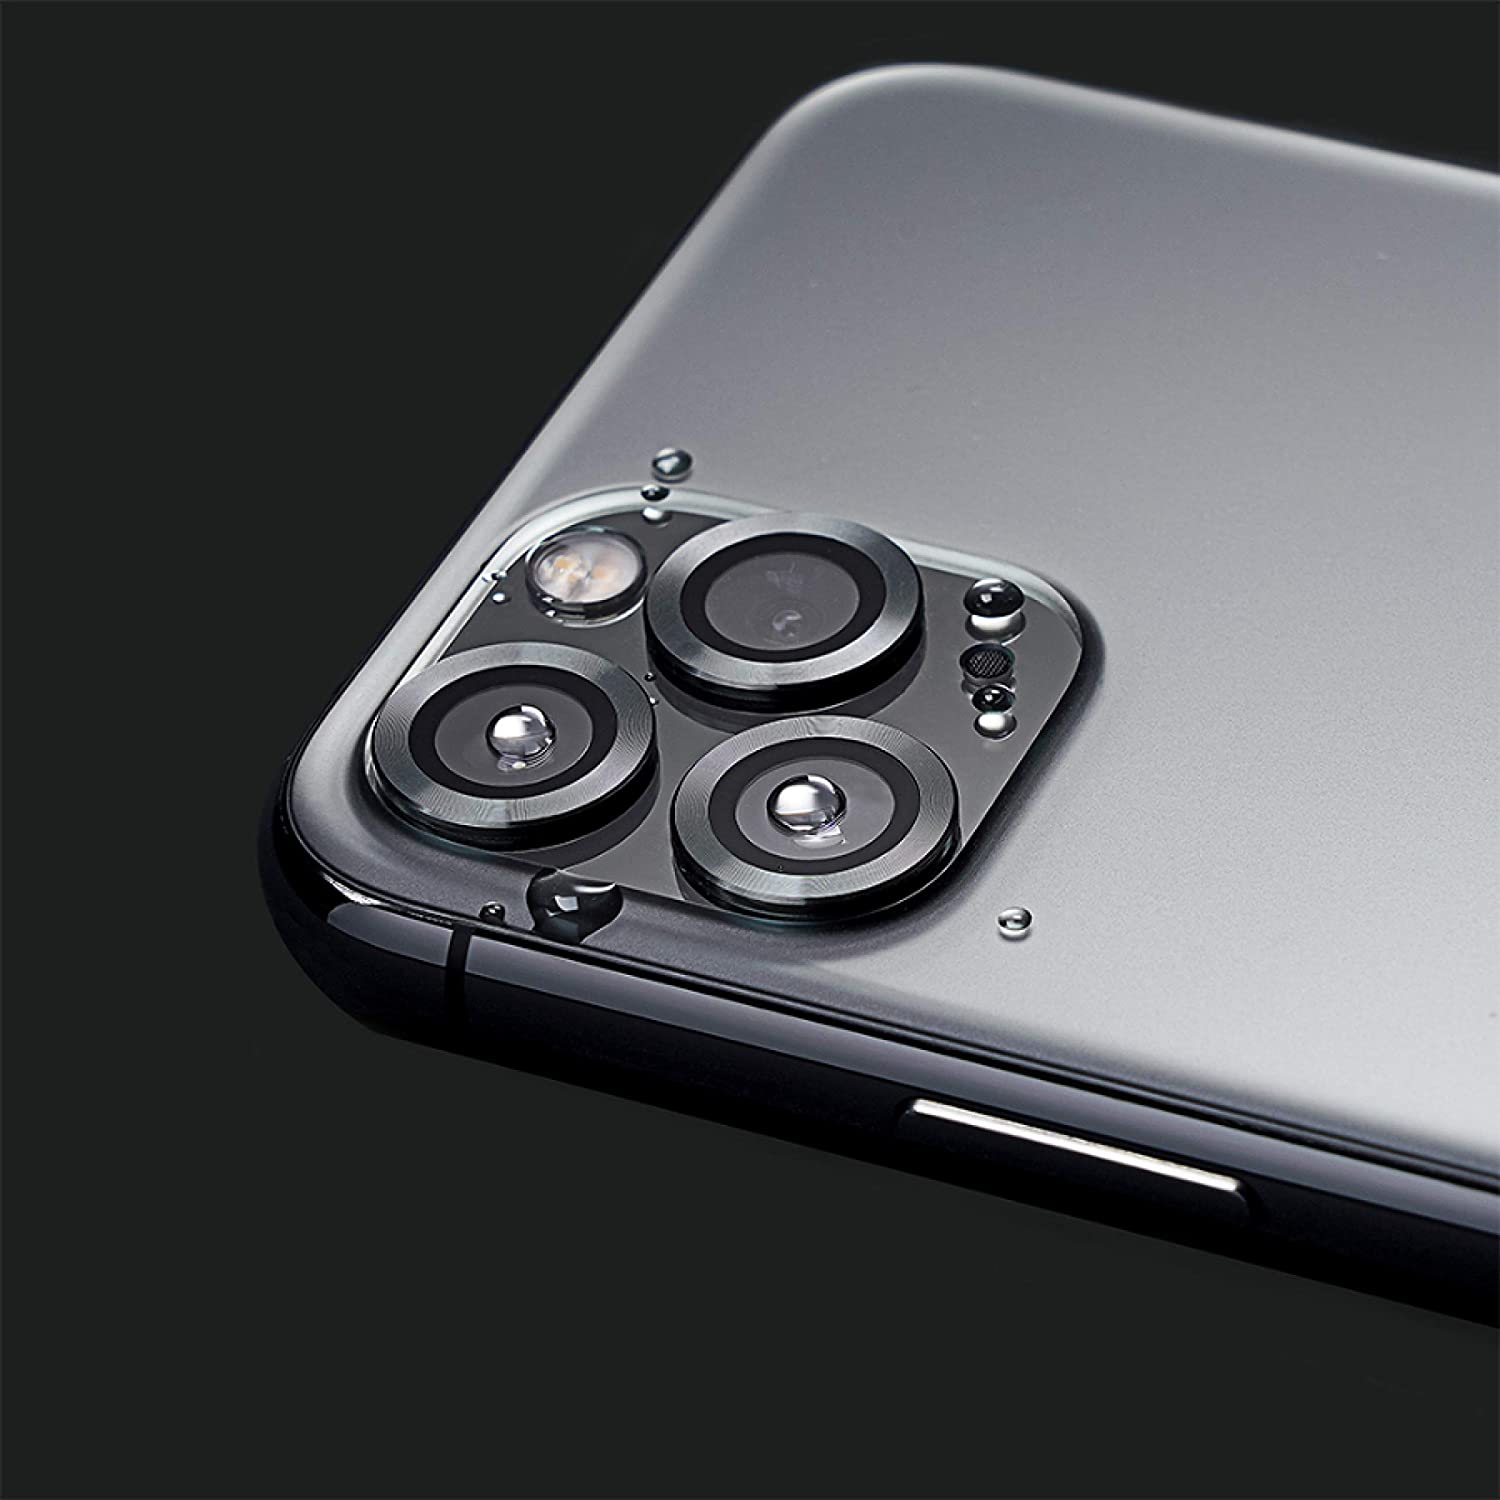 RhinoShield iPhone 12 / 12 Mini / iPad Air 4 10.9" 9H Tempered Glass Camera Lens Protectors